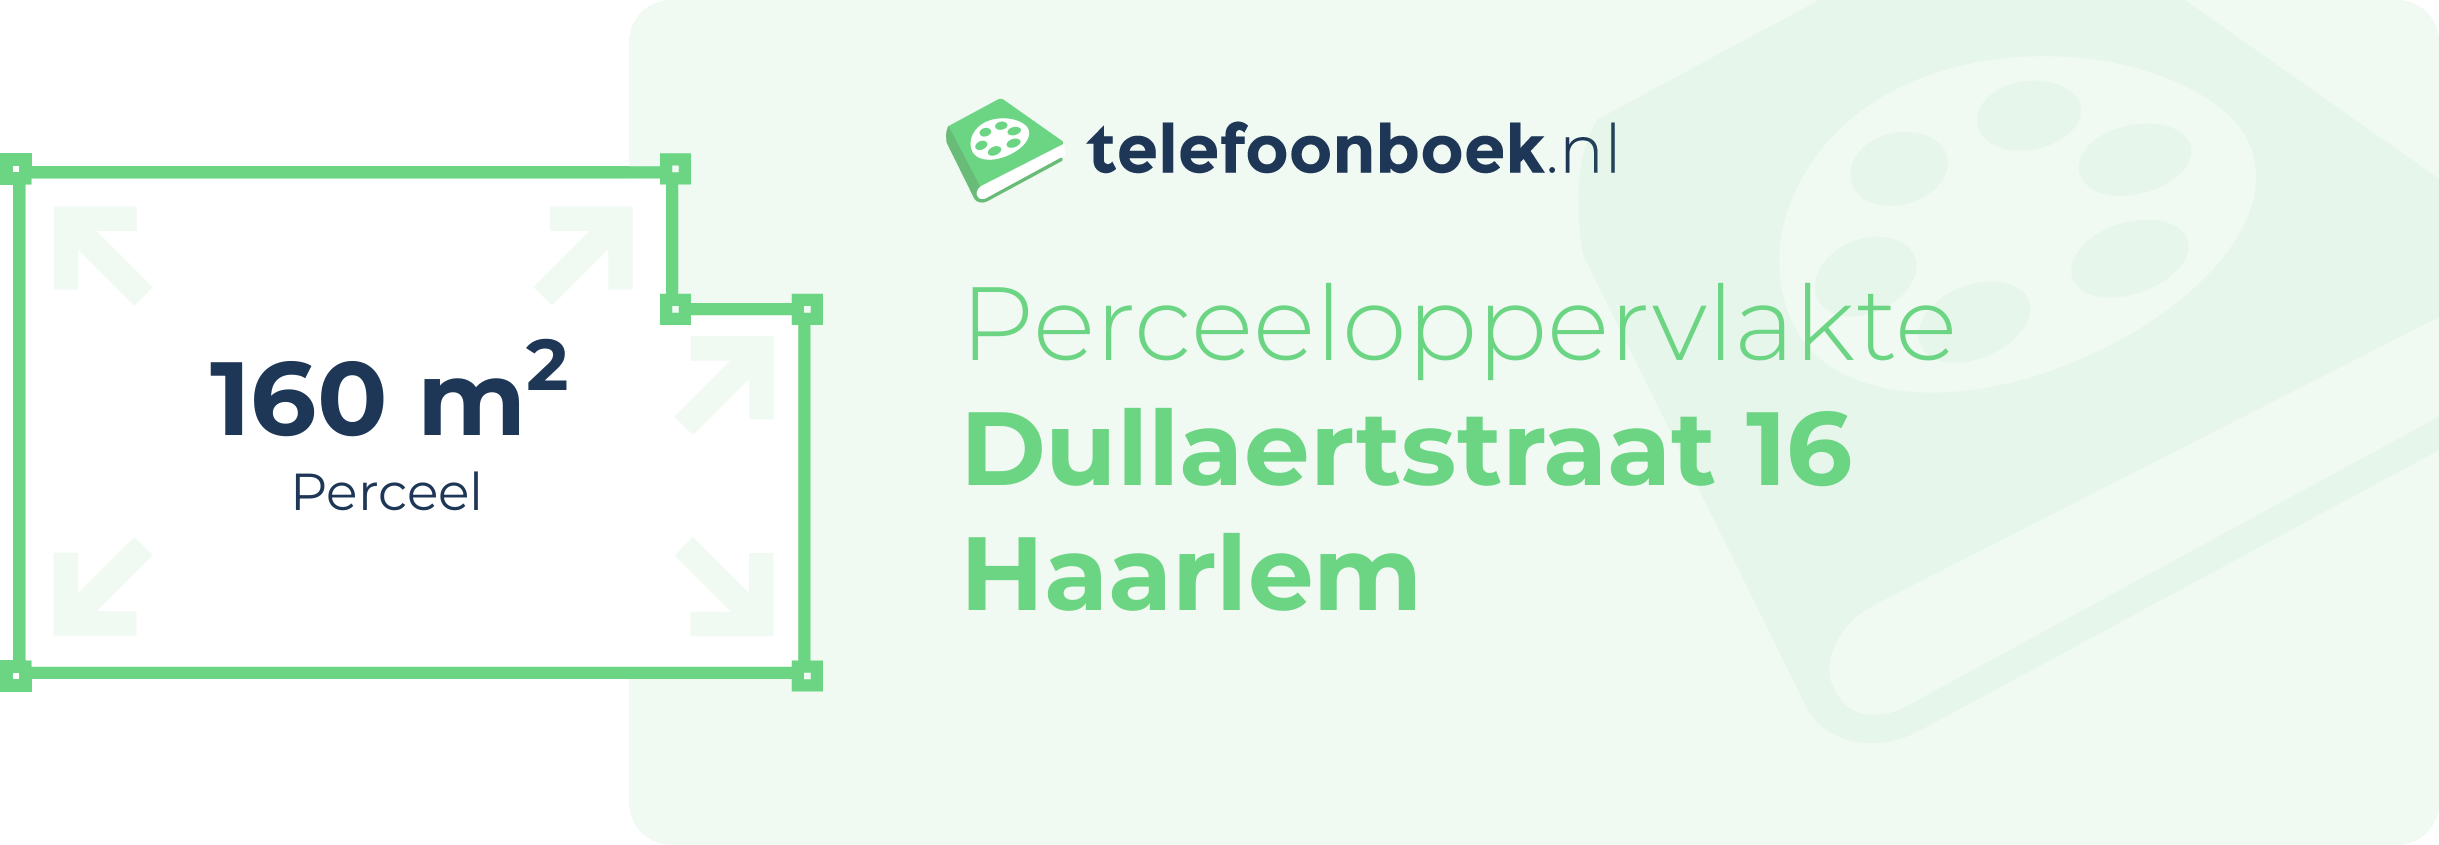 Perceeloppervlakte Dullaertstraat 16 Haarlem